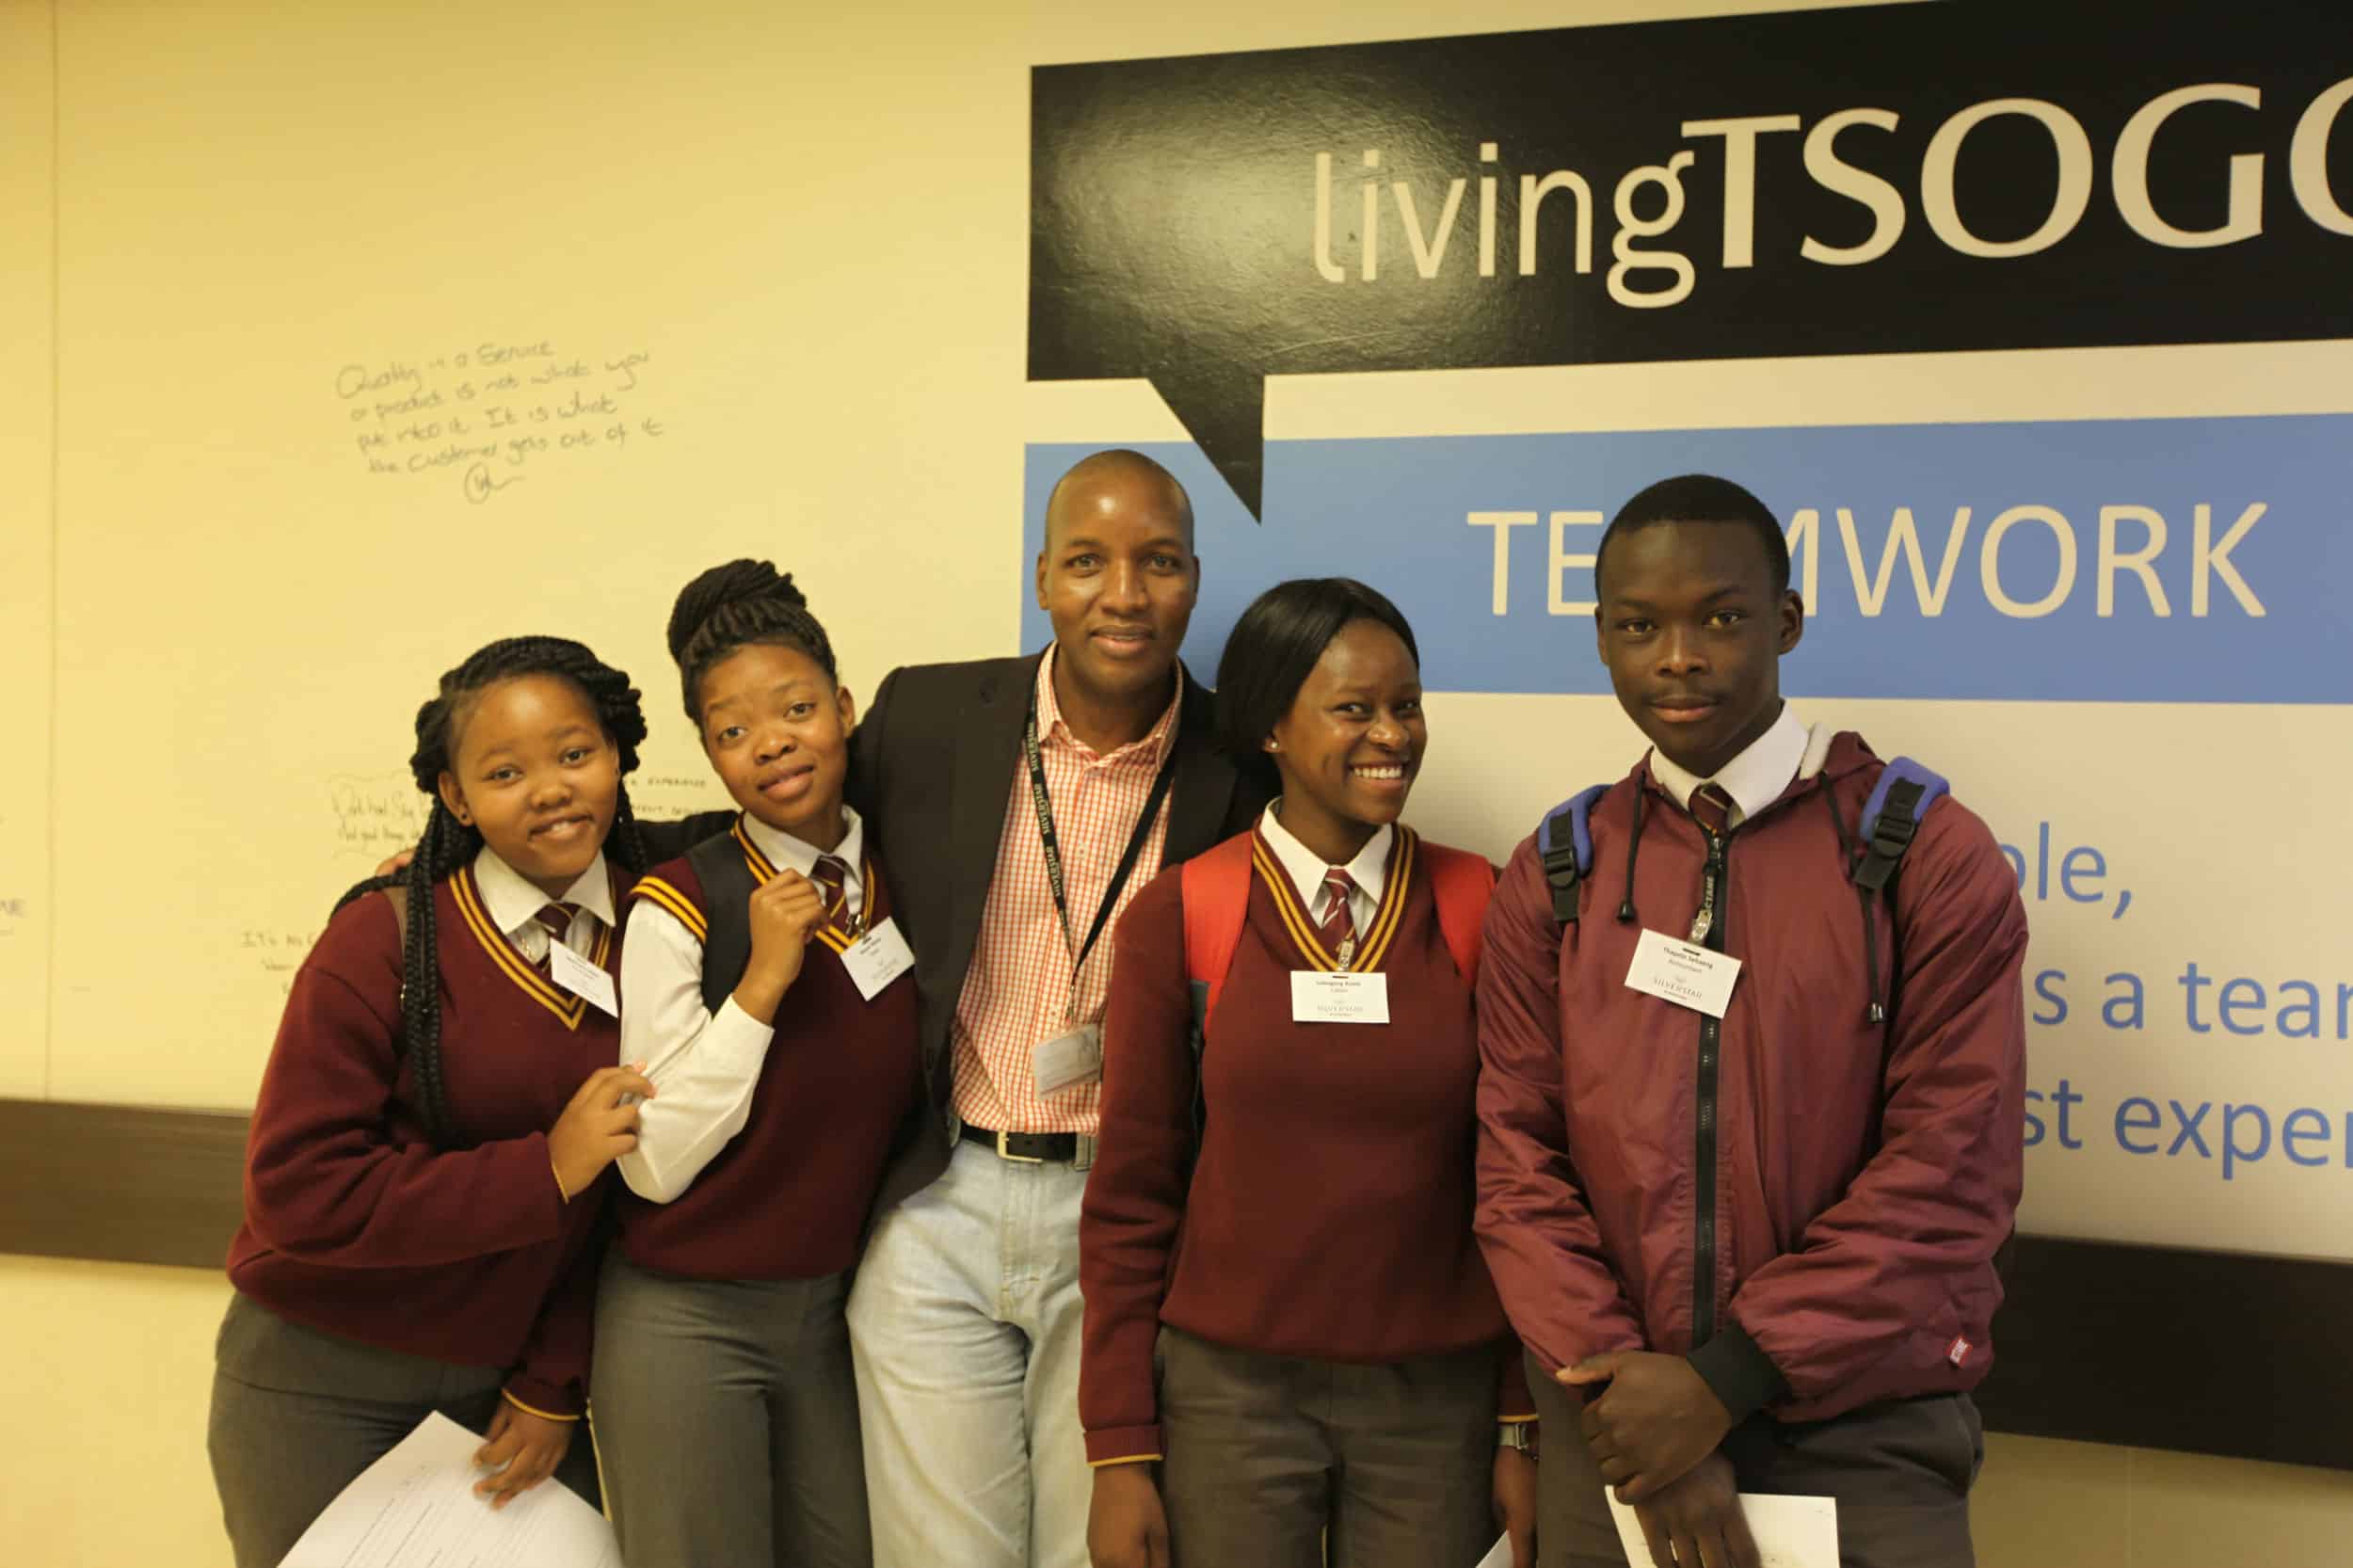 Patrick Mungani, Financial Accountant at Silverstar Casino, with students from Mosupatsela Secondary School in Kagiso.